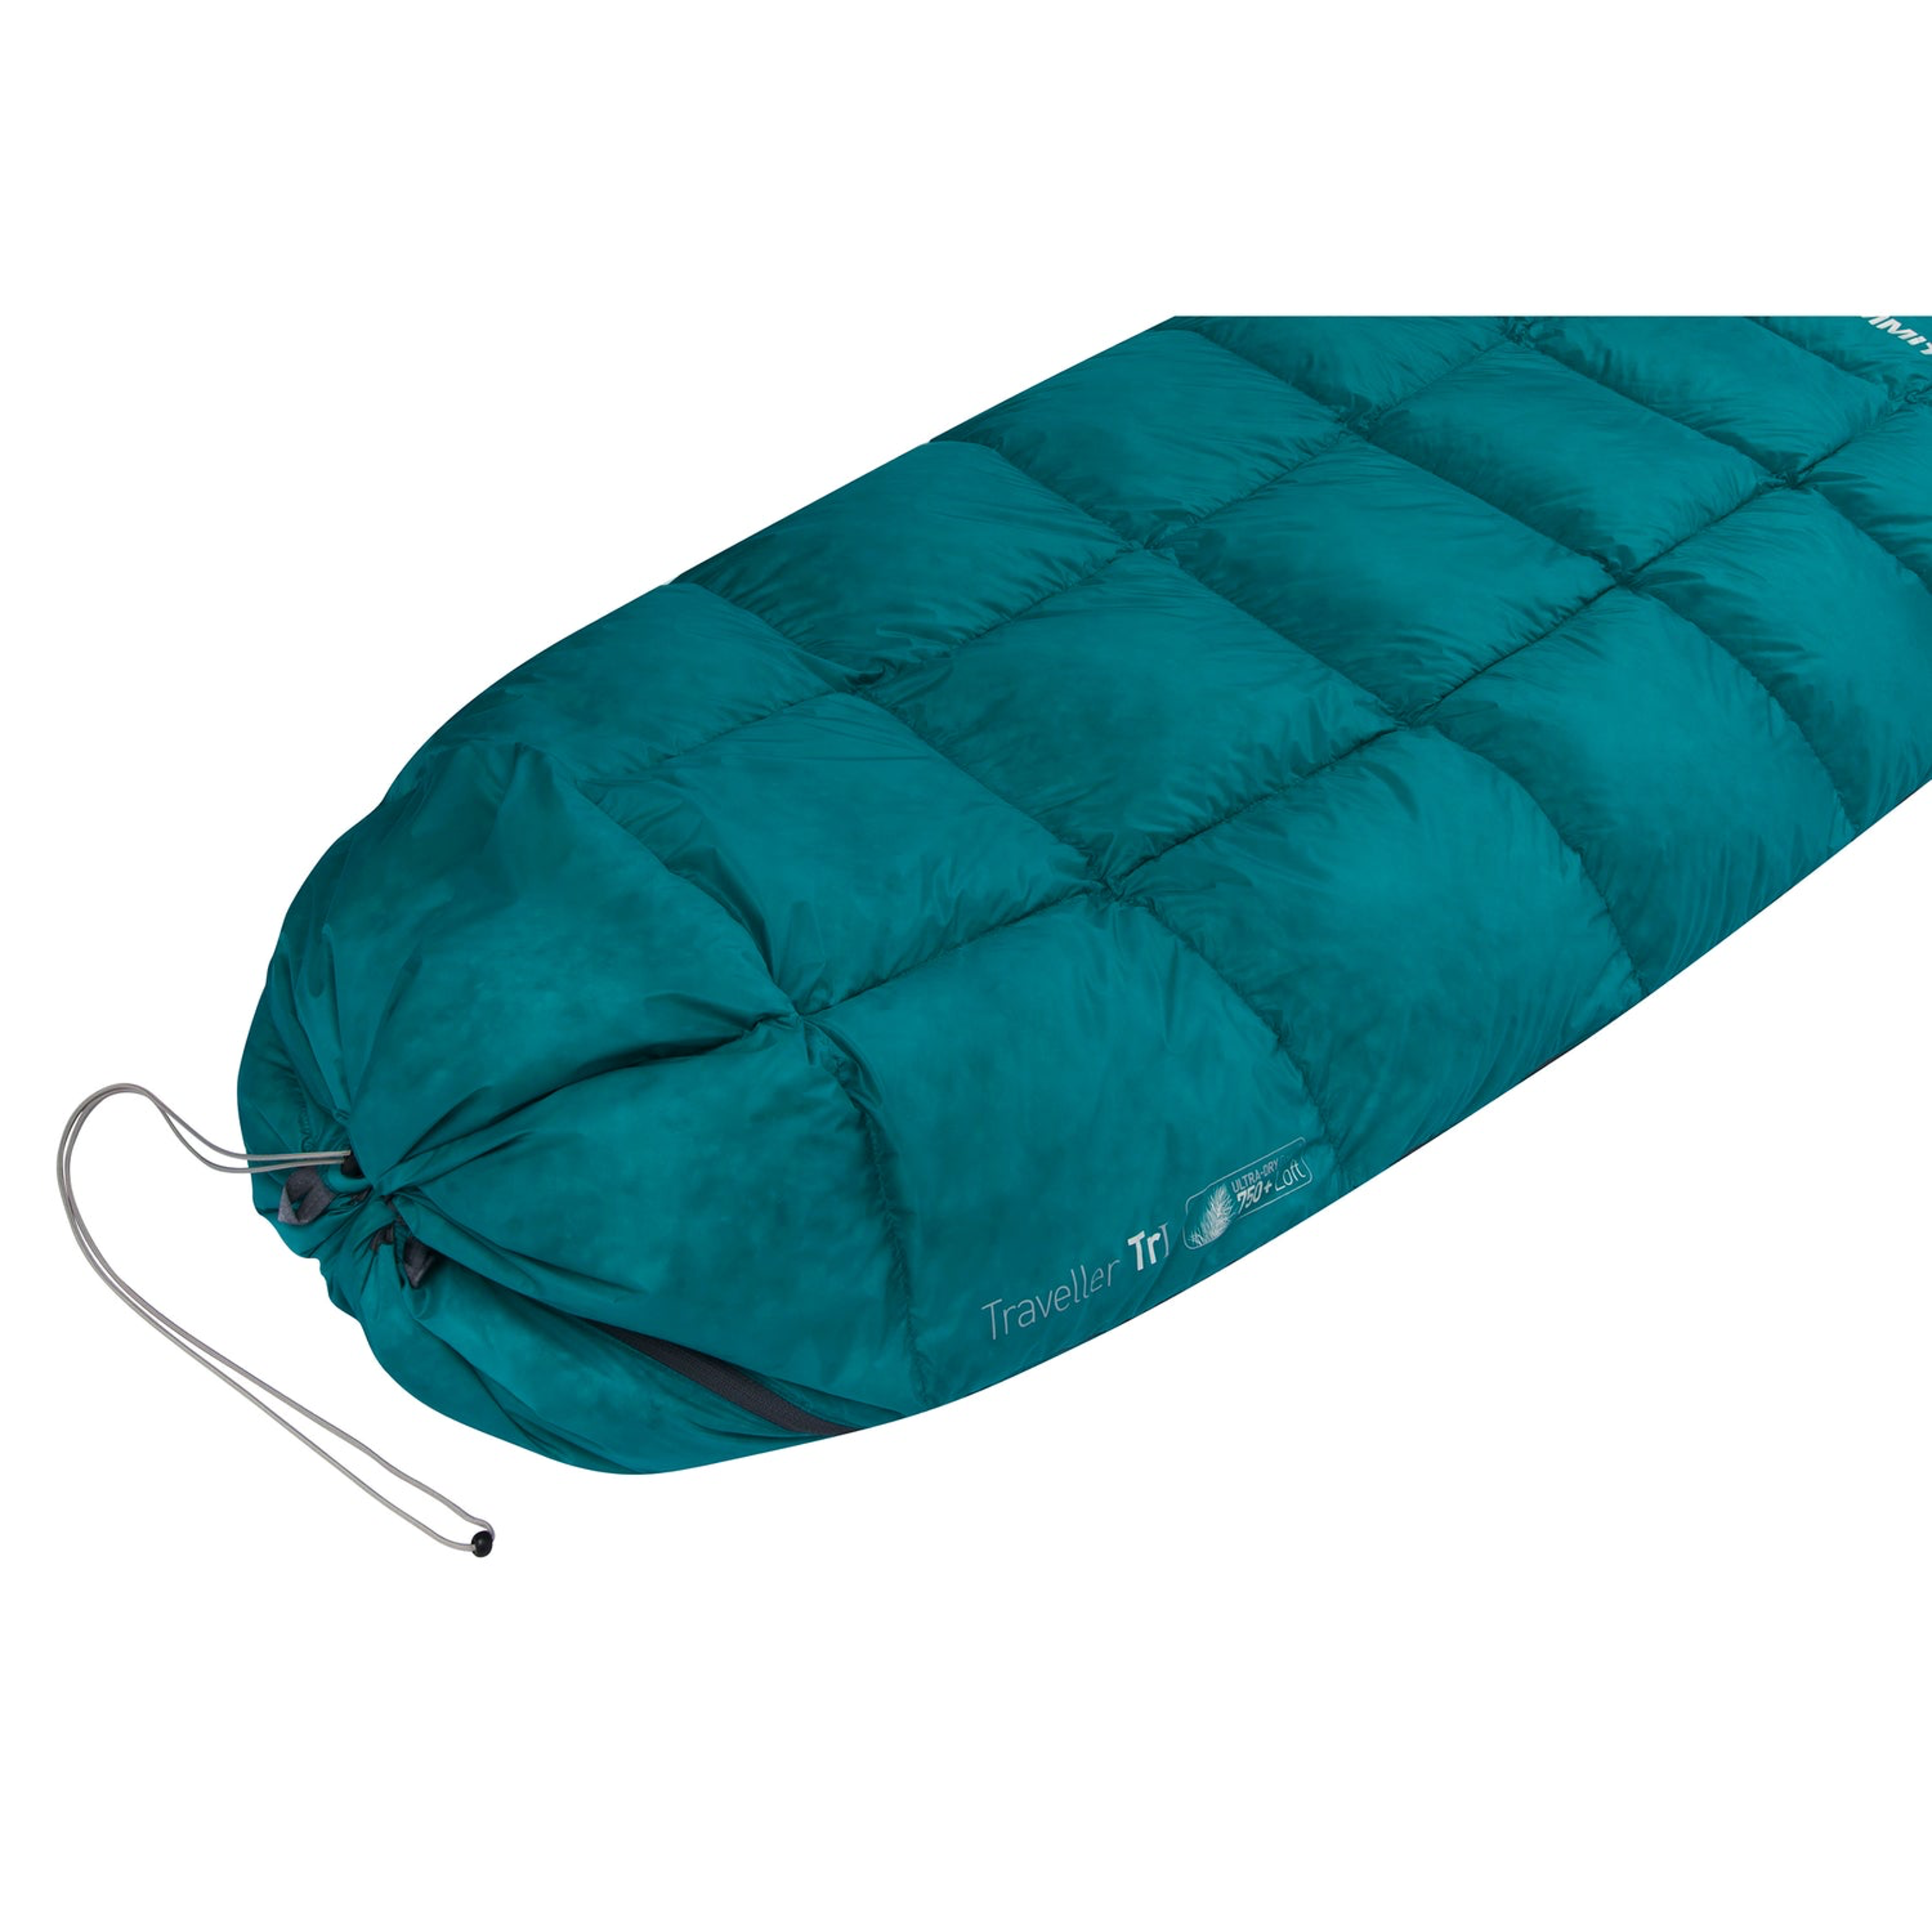 Traveller Sleeping Bag & Blanket 50º